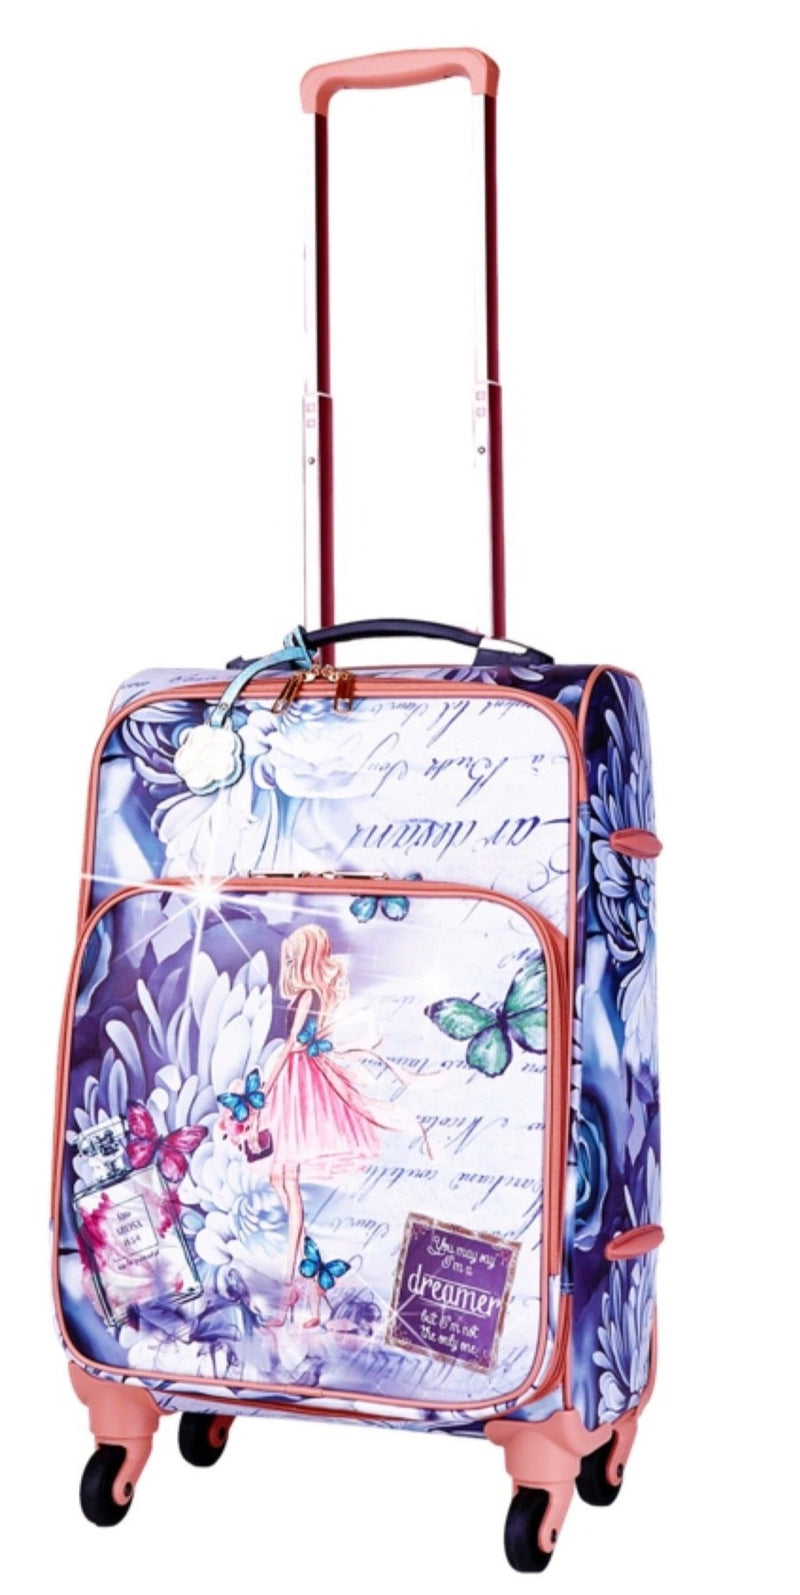 Dreamerz Carry-on Luggage Suitcase - Brangio Italy Co.